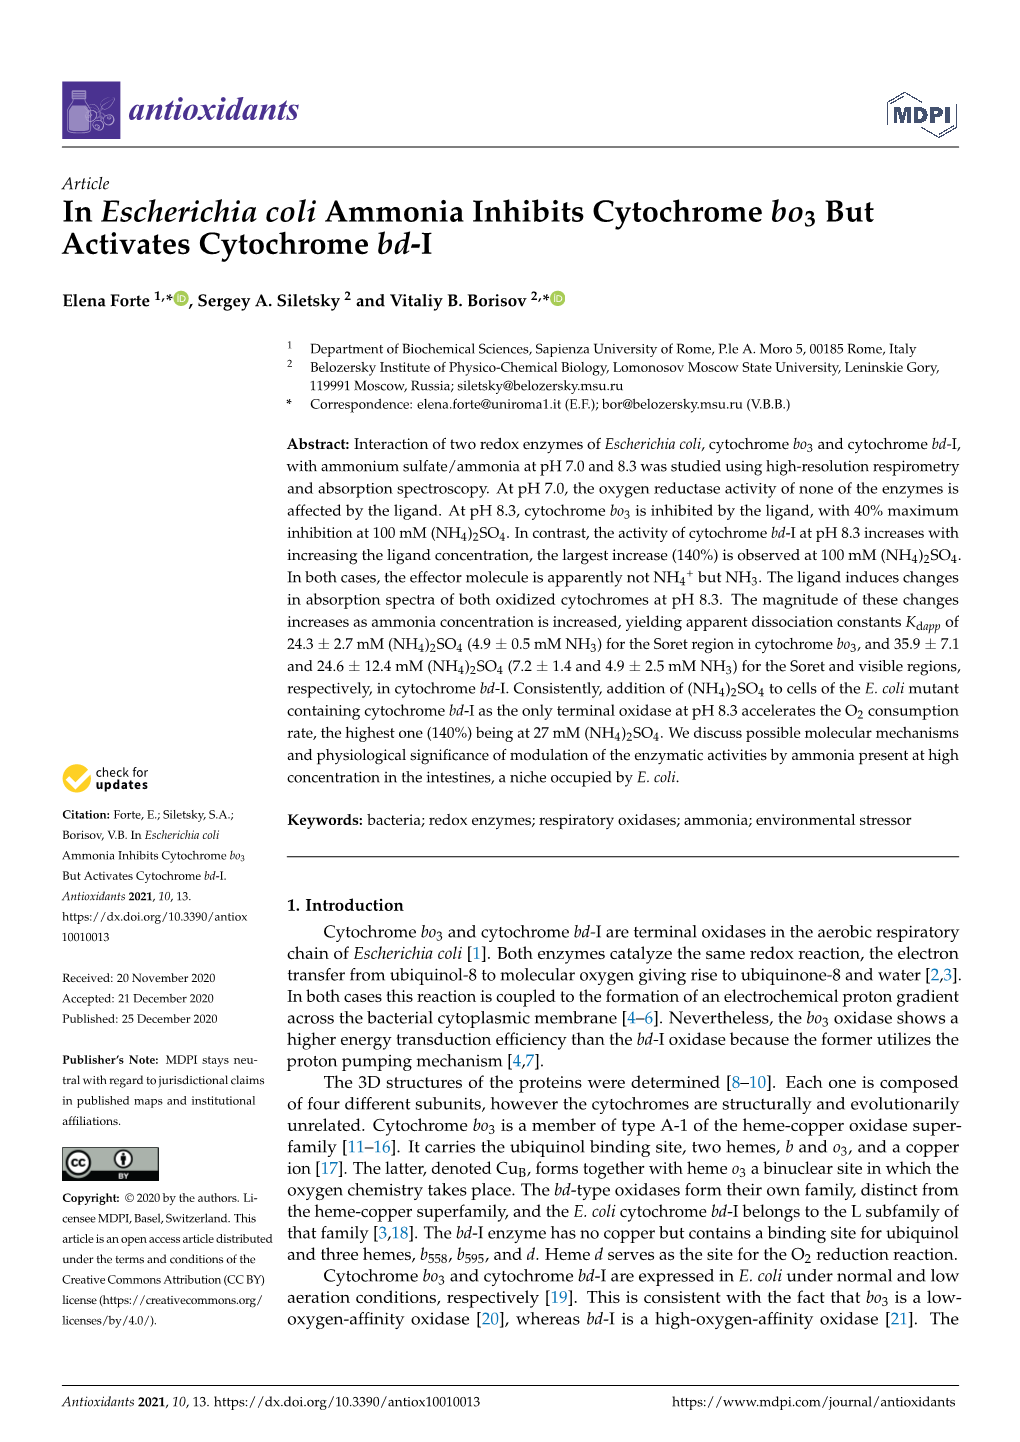 In Escherichia Coli Ammonia Inhibits Cytochrome Bo3 but Activates Cytochrome Bd-I